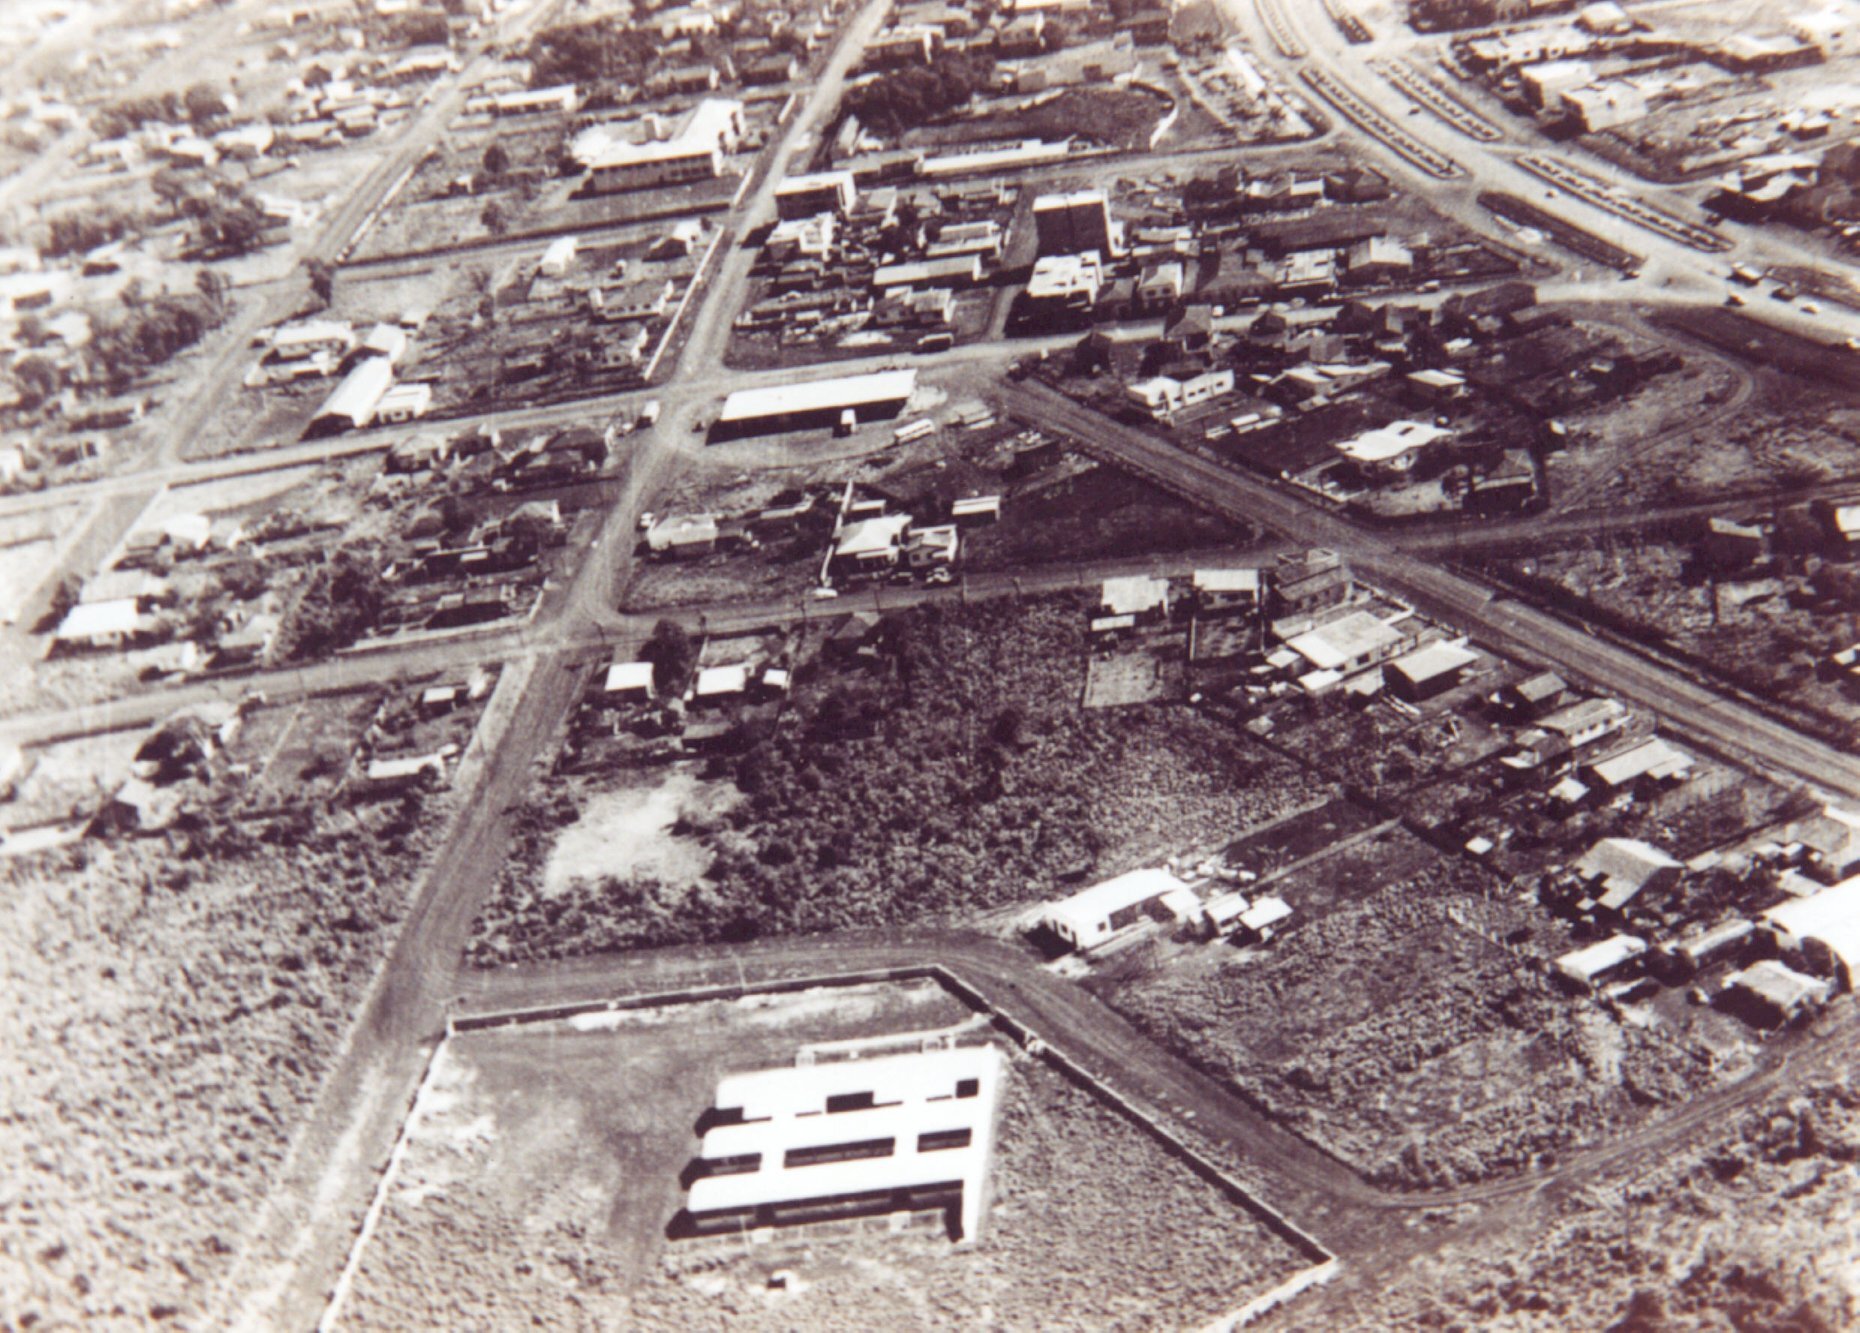 Cascavel vista de cima - 1966